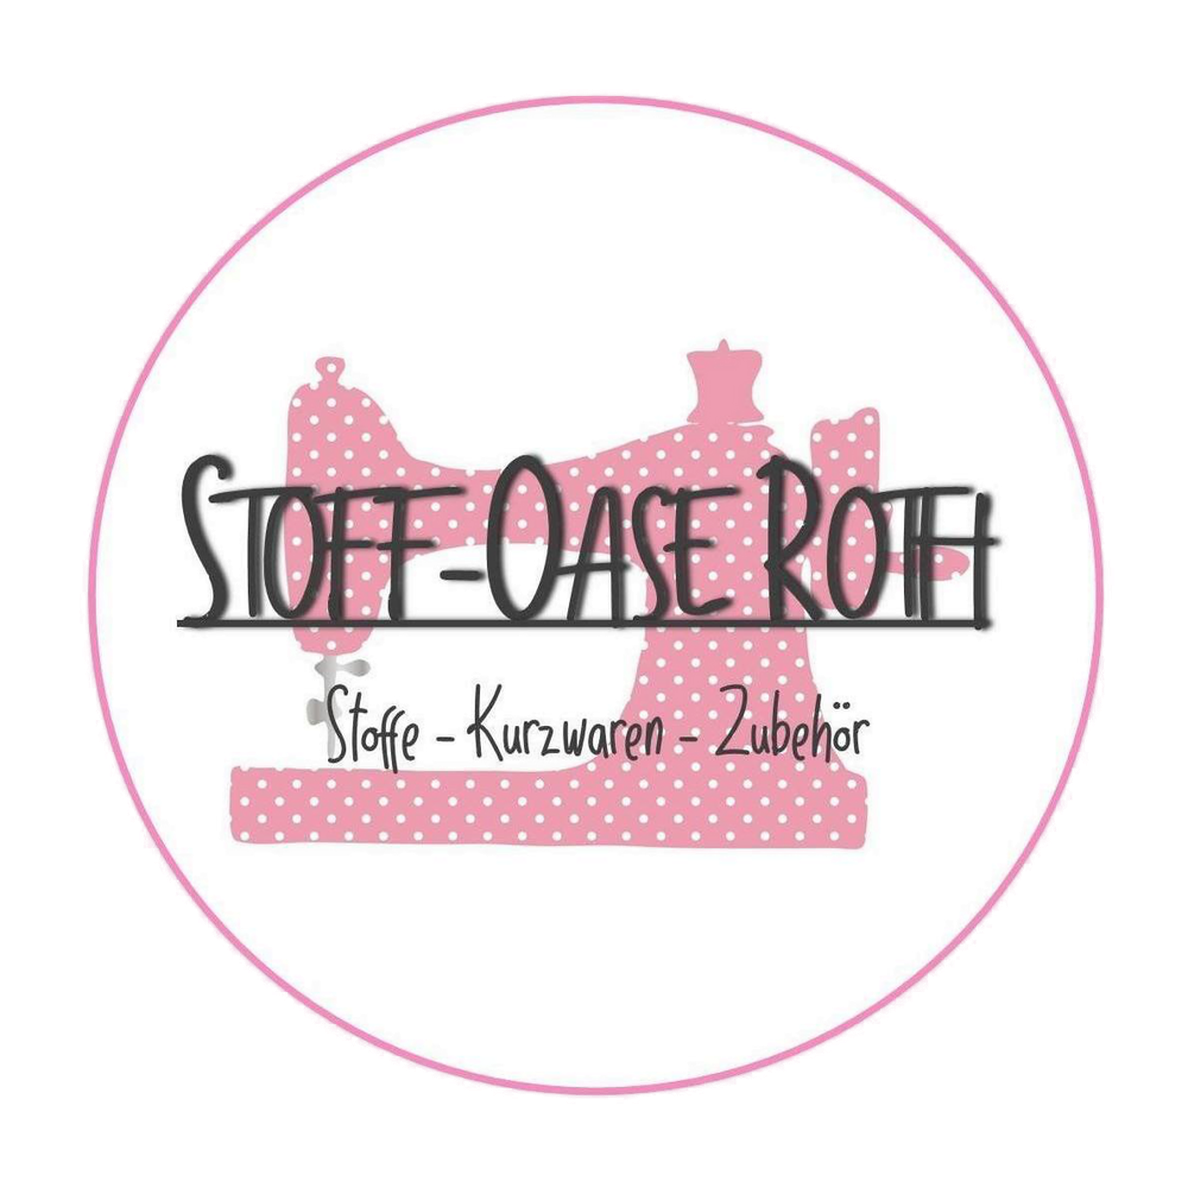 Alfred Roth Textilgroßhandel; Stoff-Oase Roth  